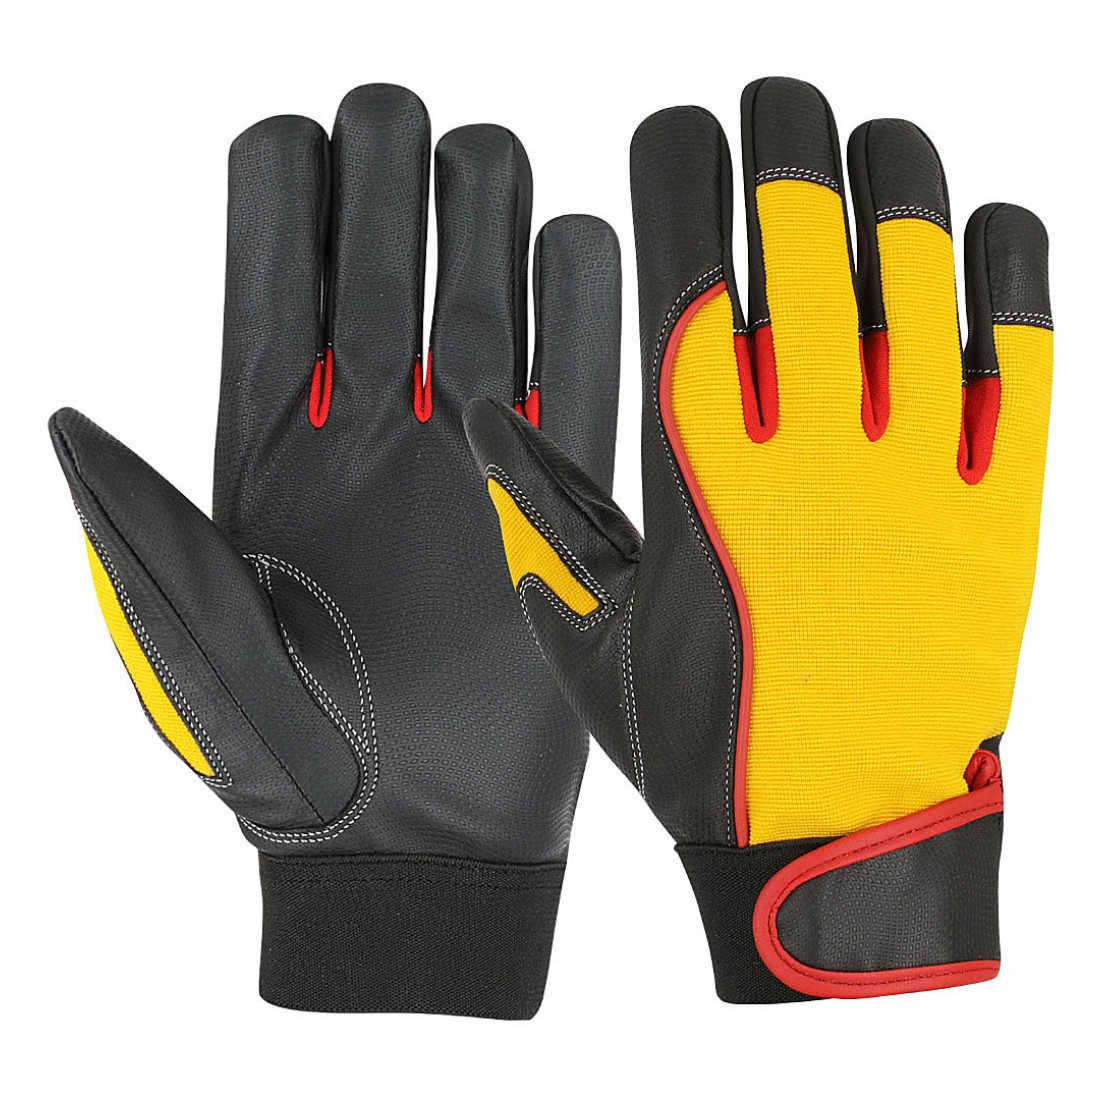 High Quality Digital PU leather Mechanics Gloves 